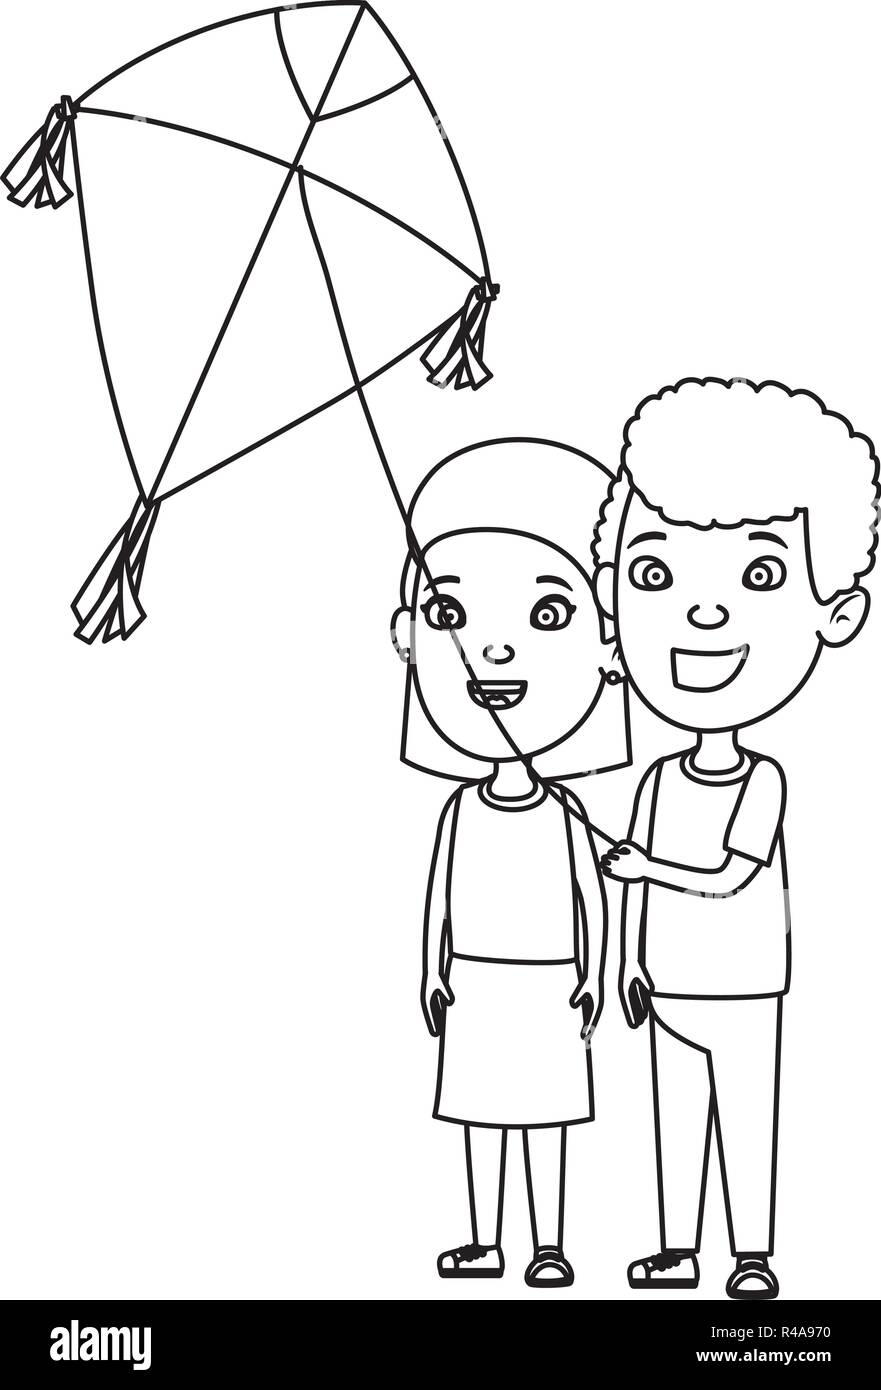 Download KiteFlying Little Girl Coloring Page RoyaltyFree Stock  Illustration Image  Pixabay